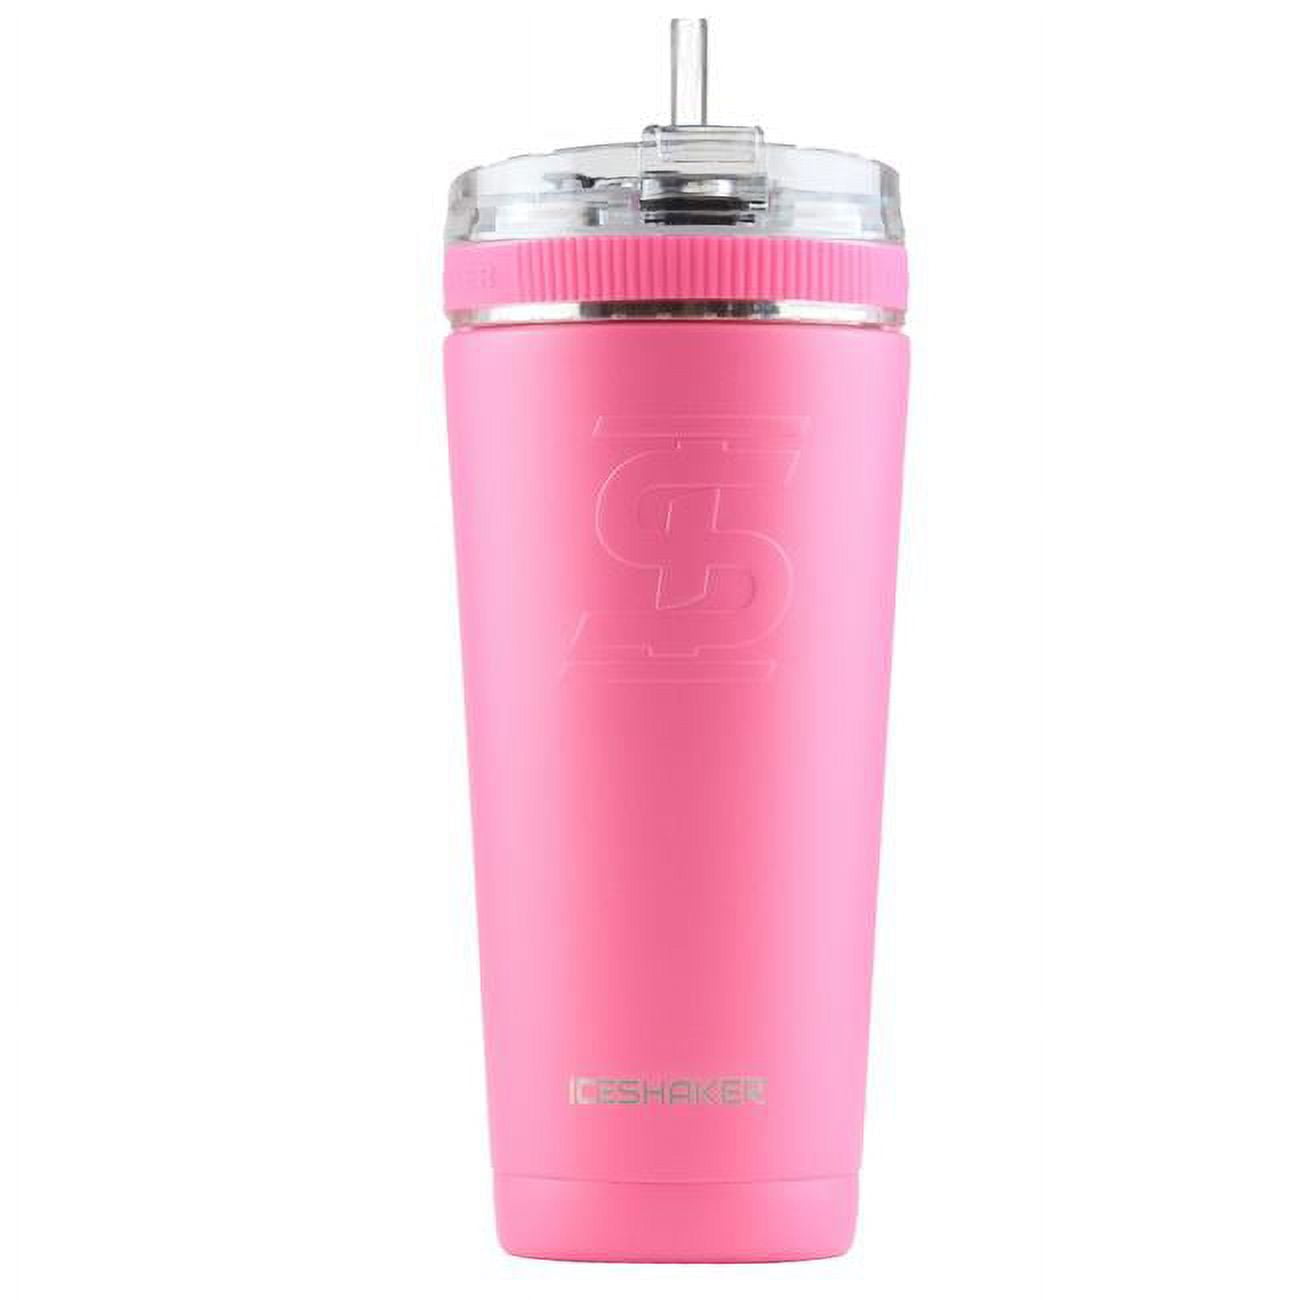 26oz Ice Shaker - Pink